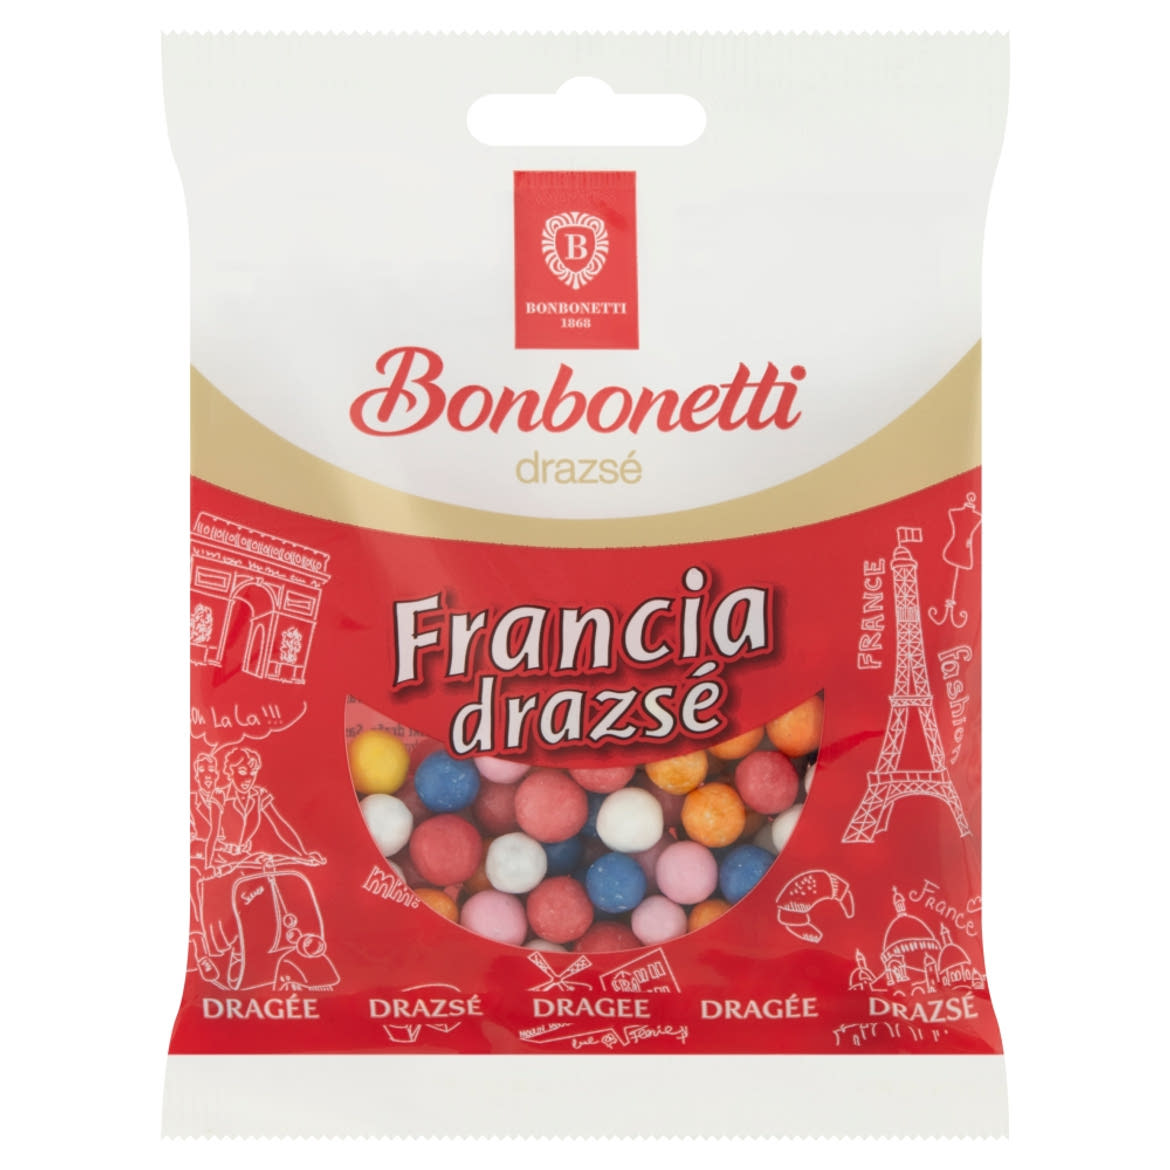 Bonbonetti francia drazsé